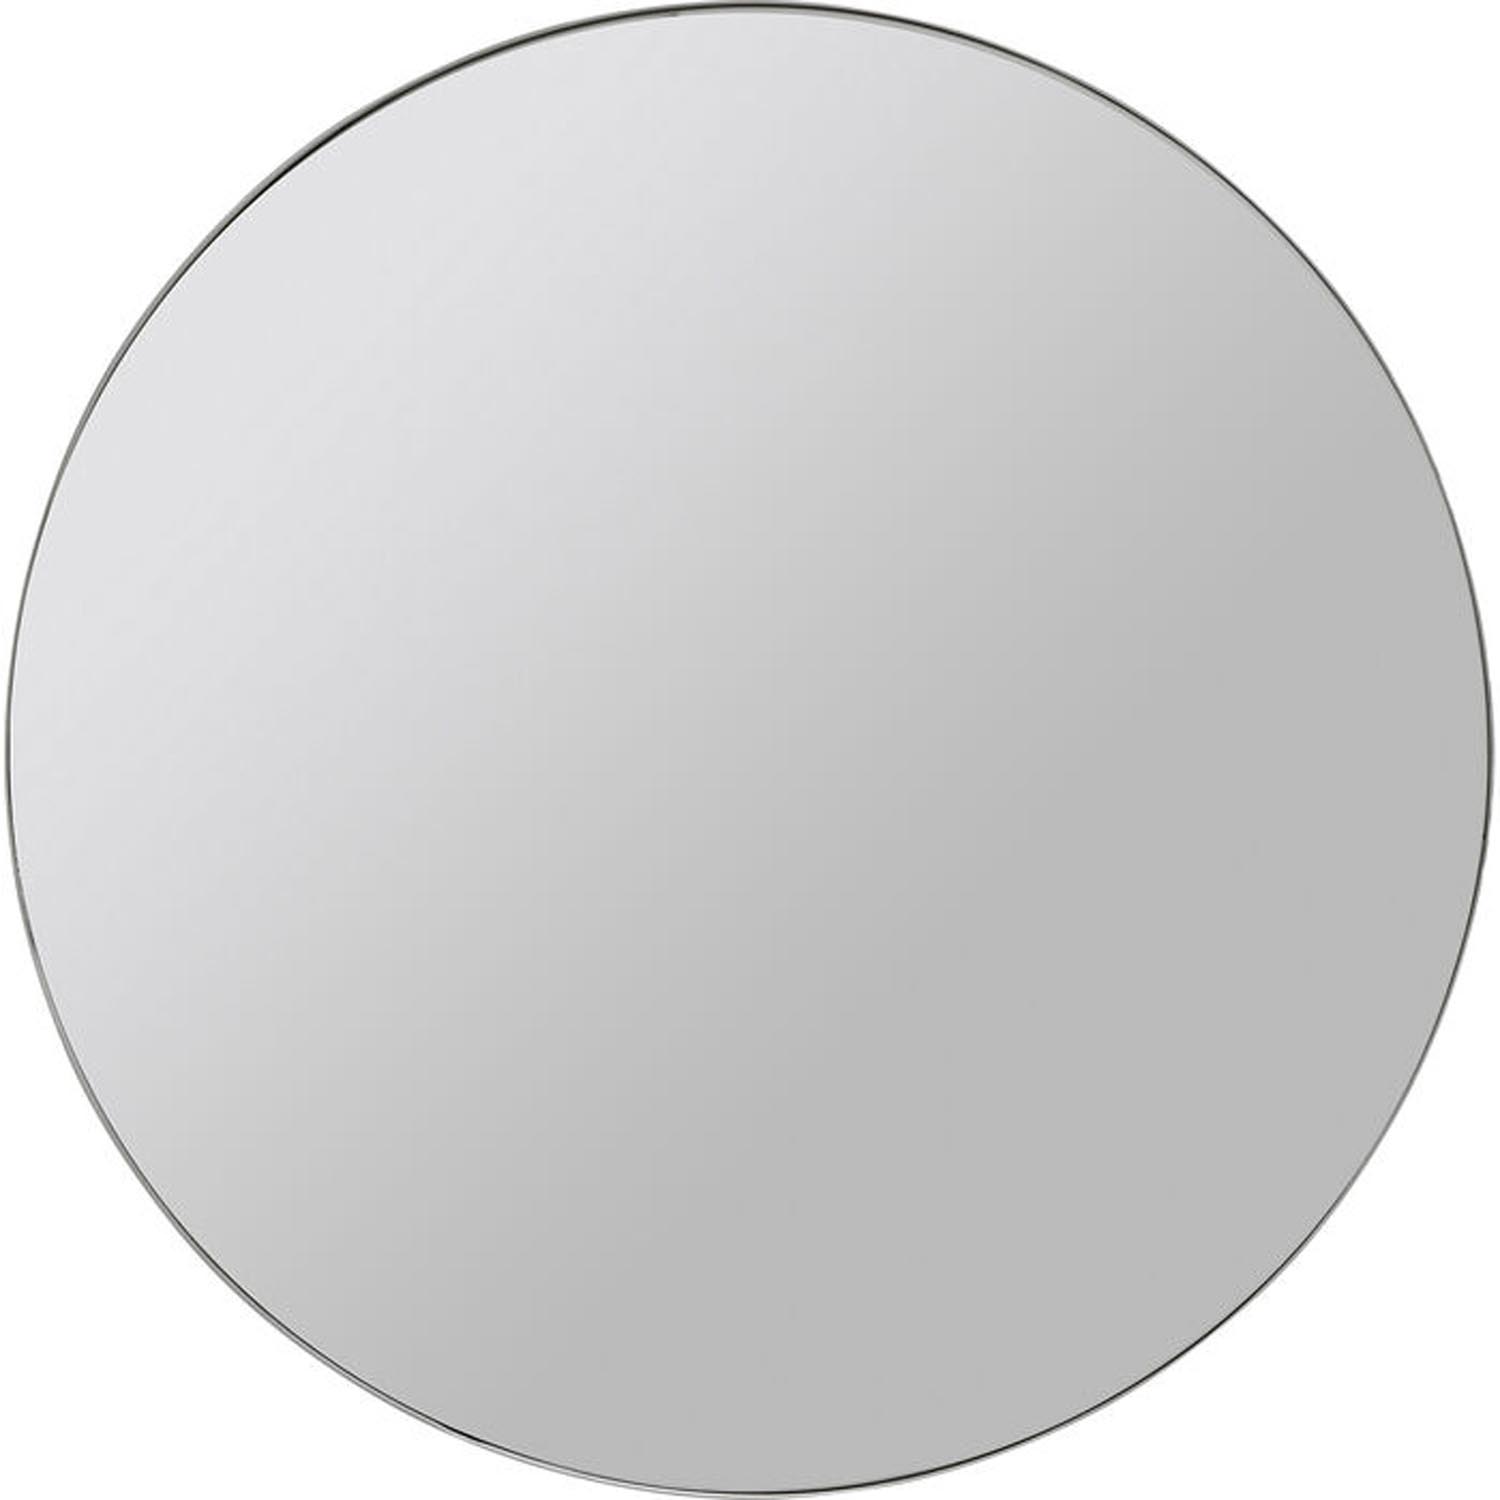 KARE DESIGN Curvy Chrome Look vægspejl, rund - spejlglas og stål (Ø60)